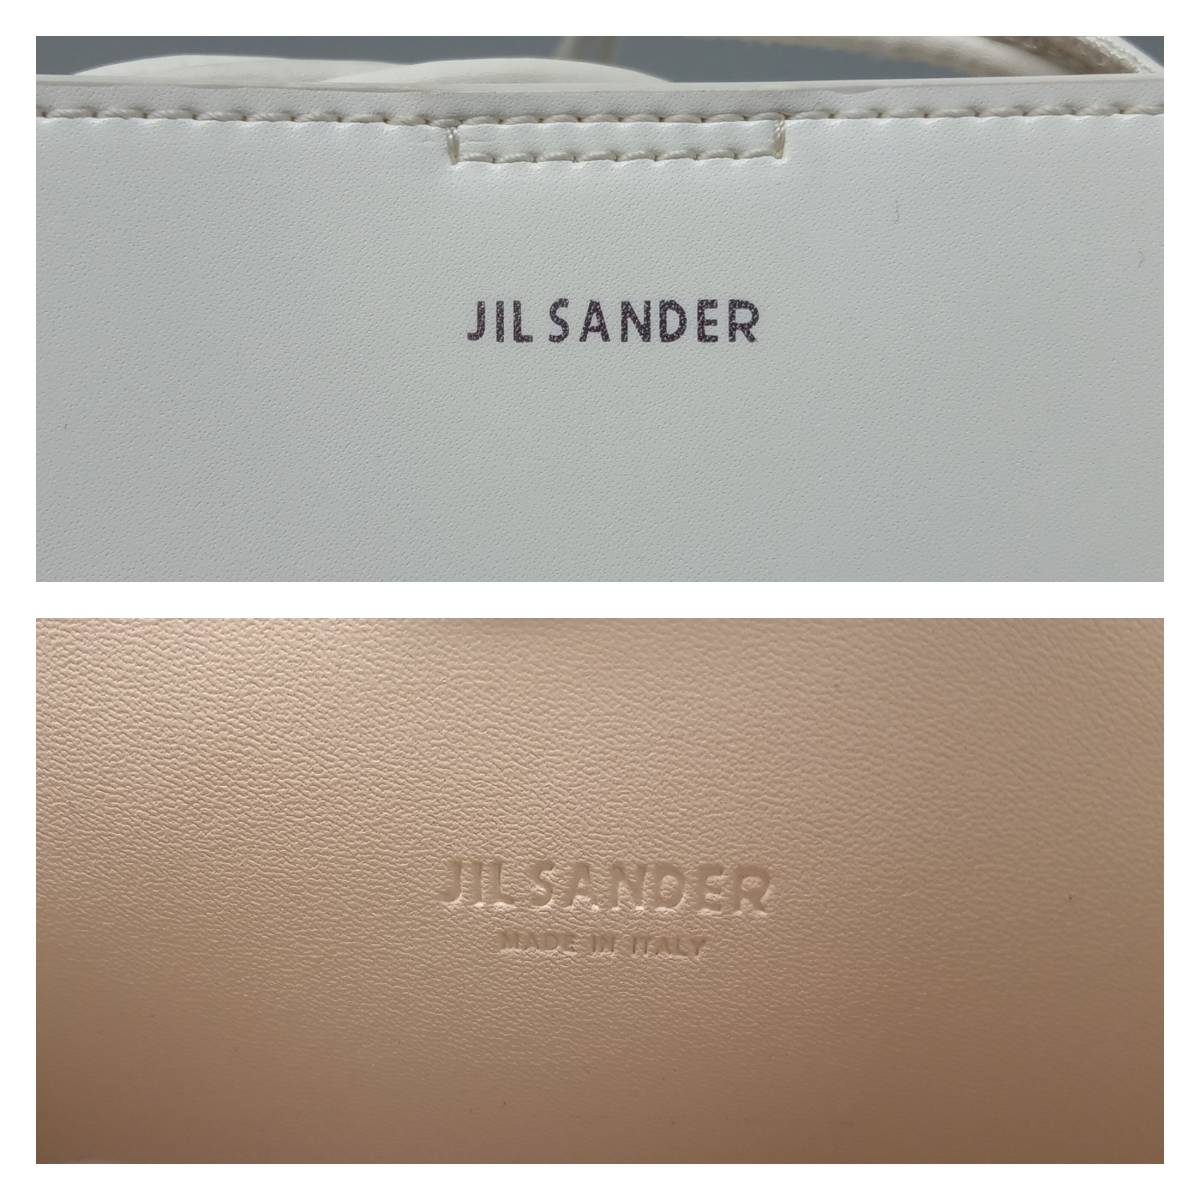 ★ JIL SANDER ... Tangle Small  наплечная сумка  ... молдинг  сумка   кожа   белый  ... год 